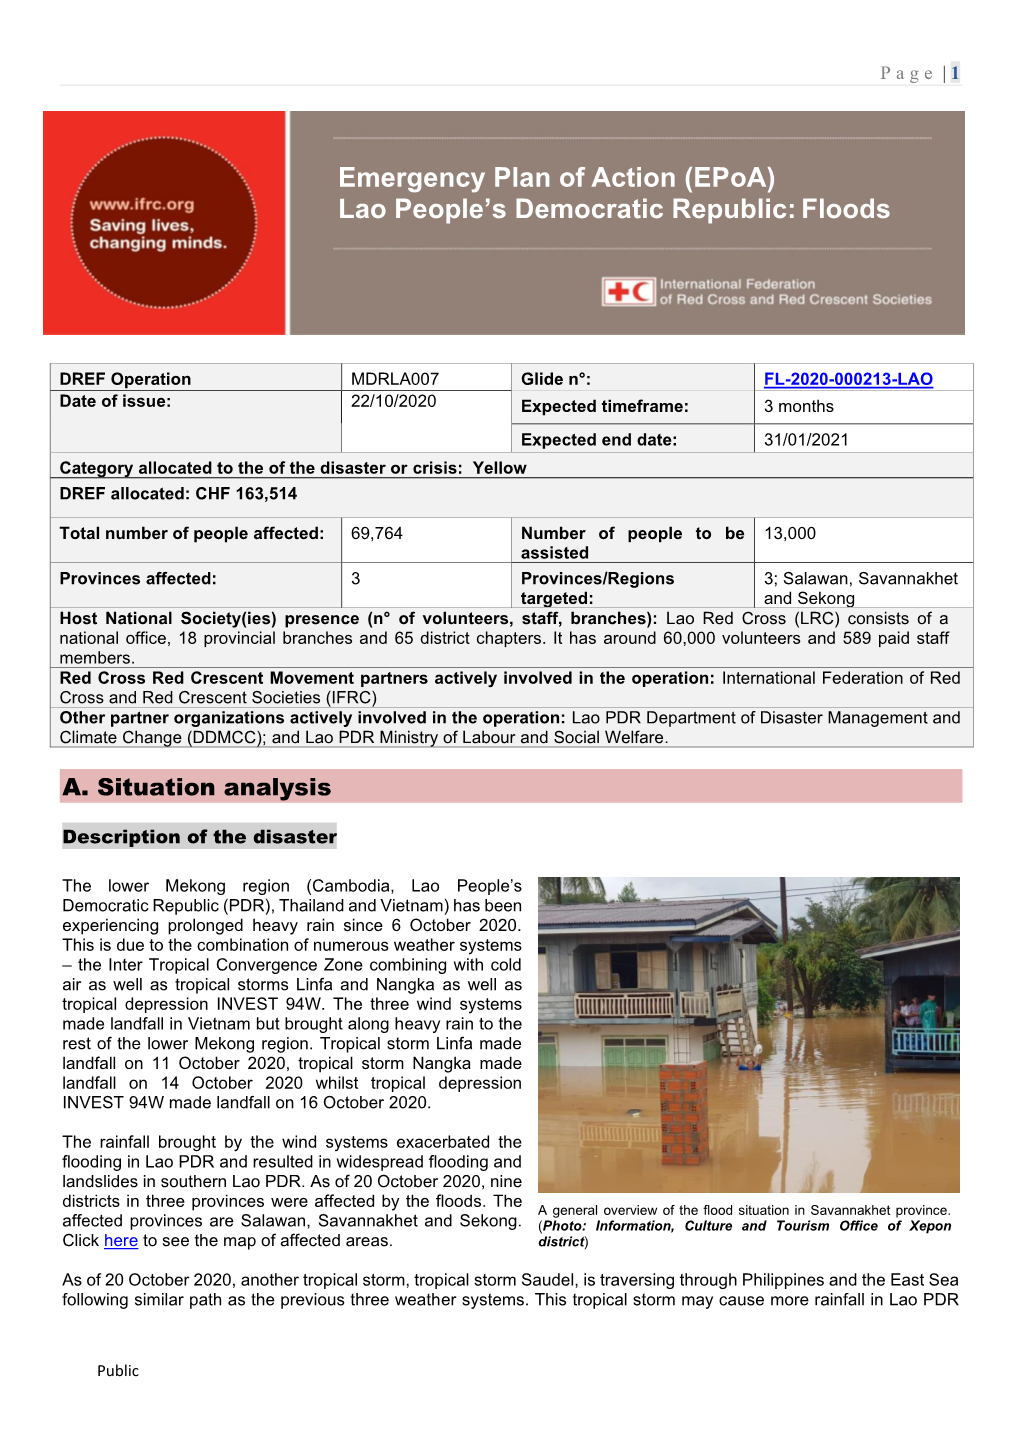 Emergency Plan of Action (Epoa) Lao People's Democratic Republic: Floods